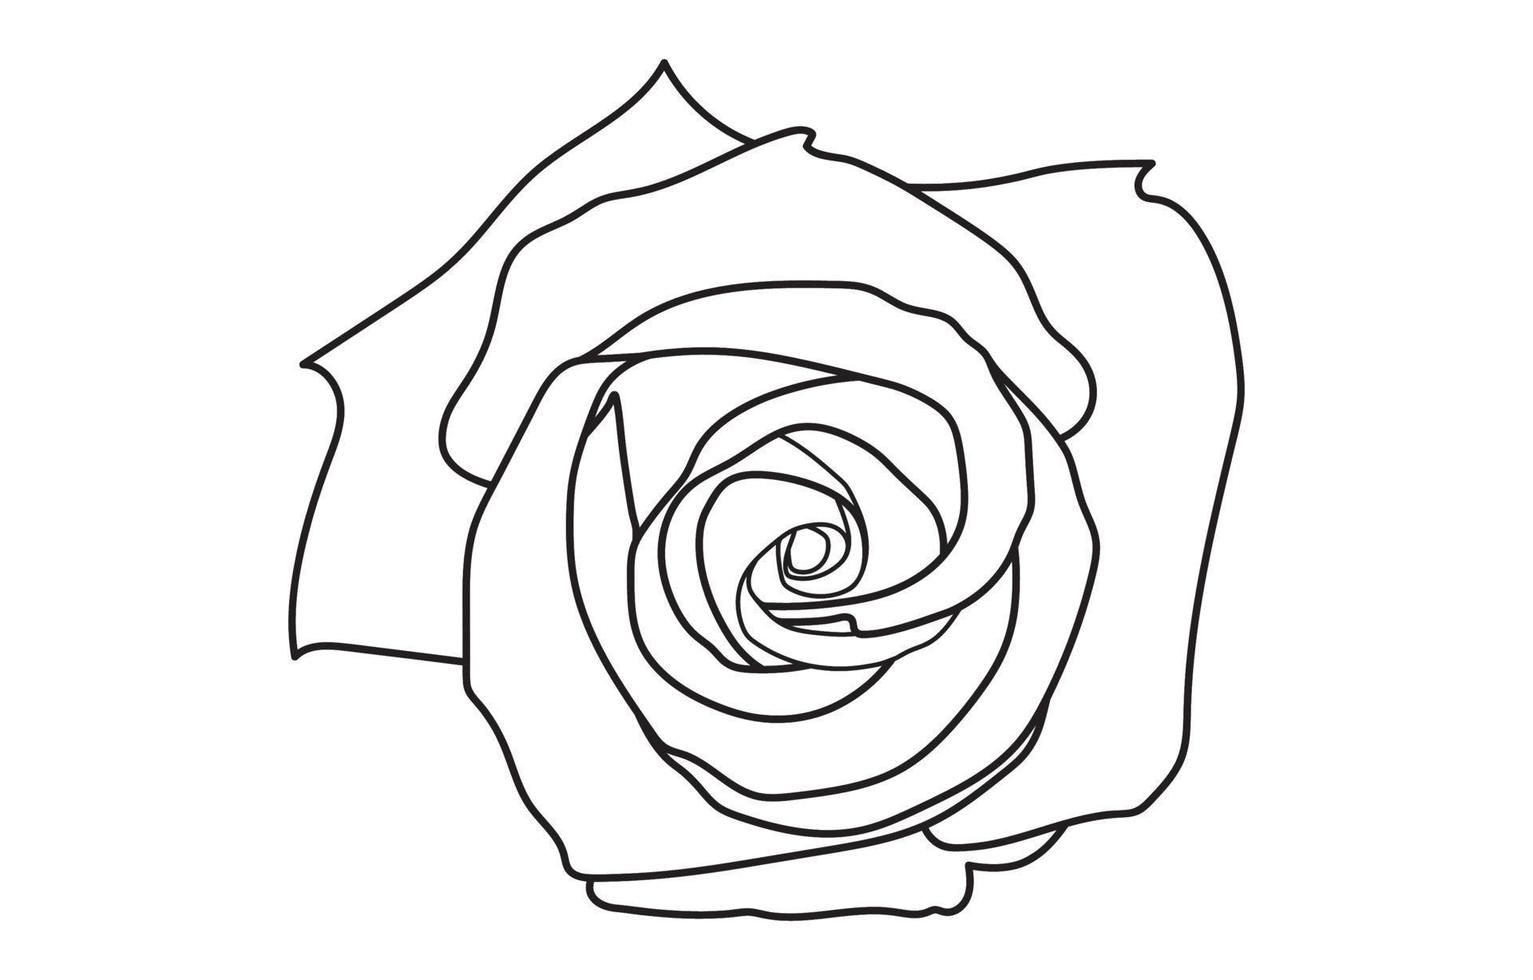 Rose vector graphic design, for prints, vector illustration